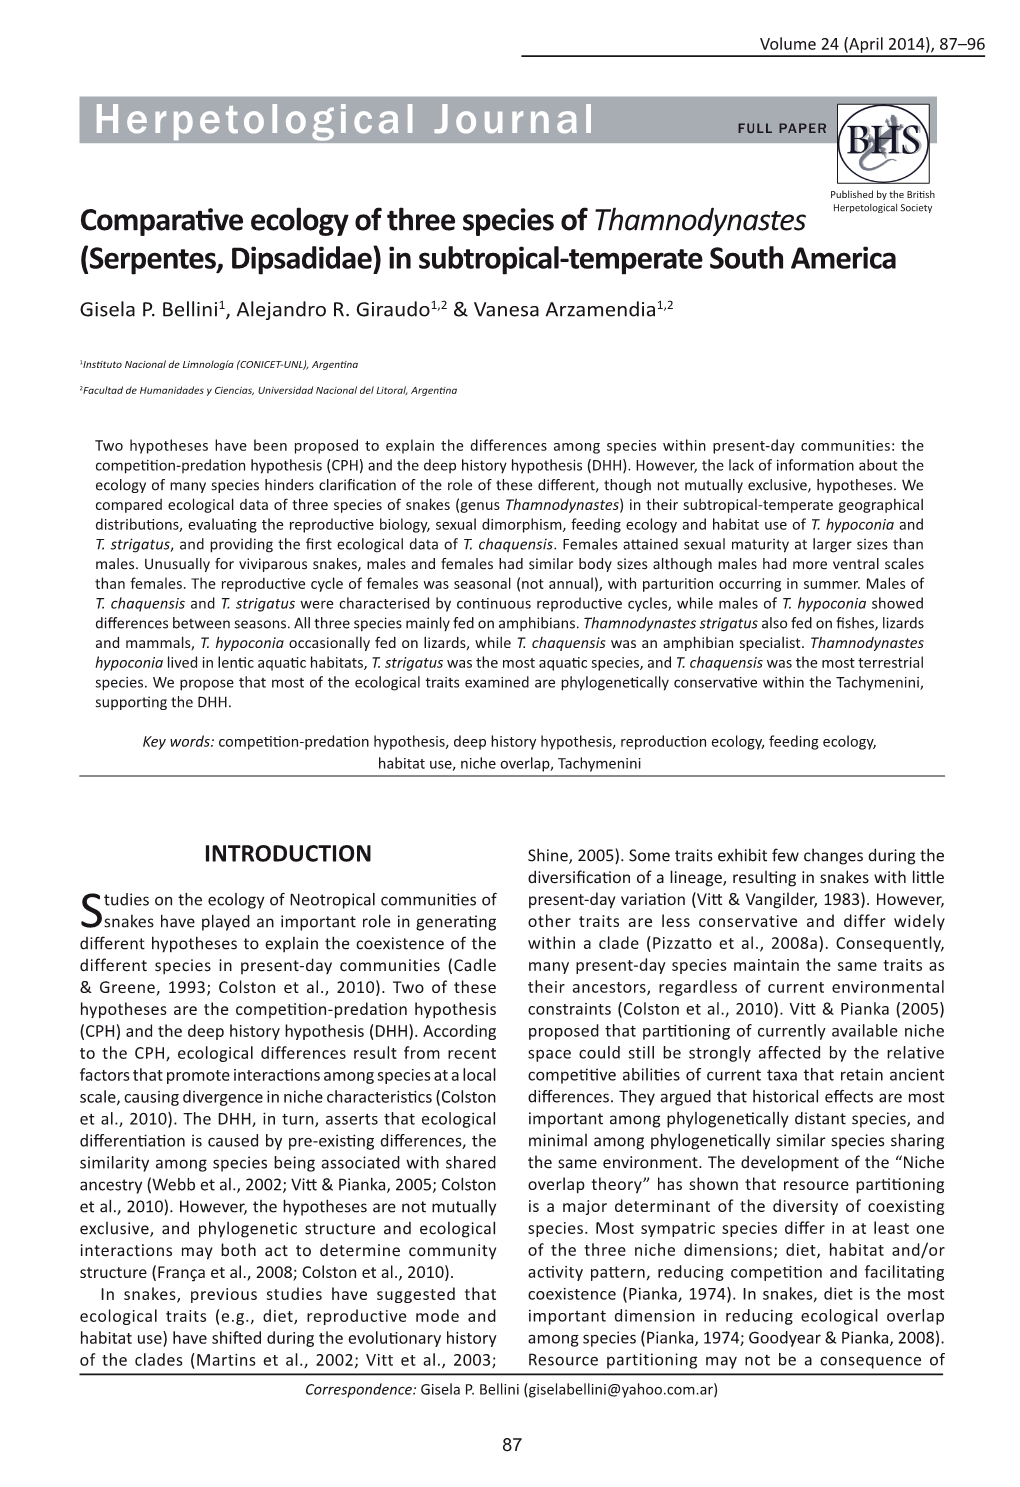 Comparative Ecology of Three Species of Thamnodynastes (Serpentes